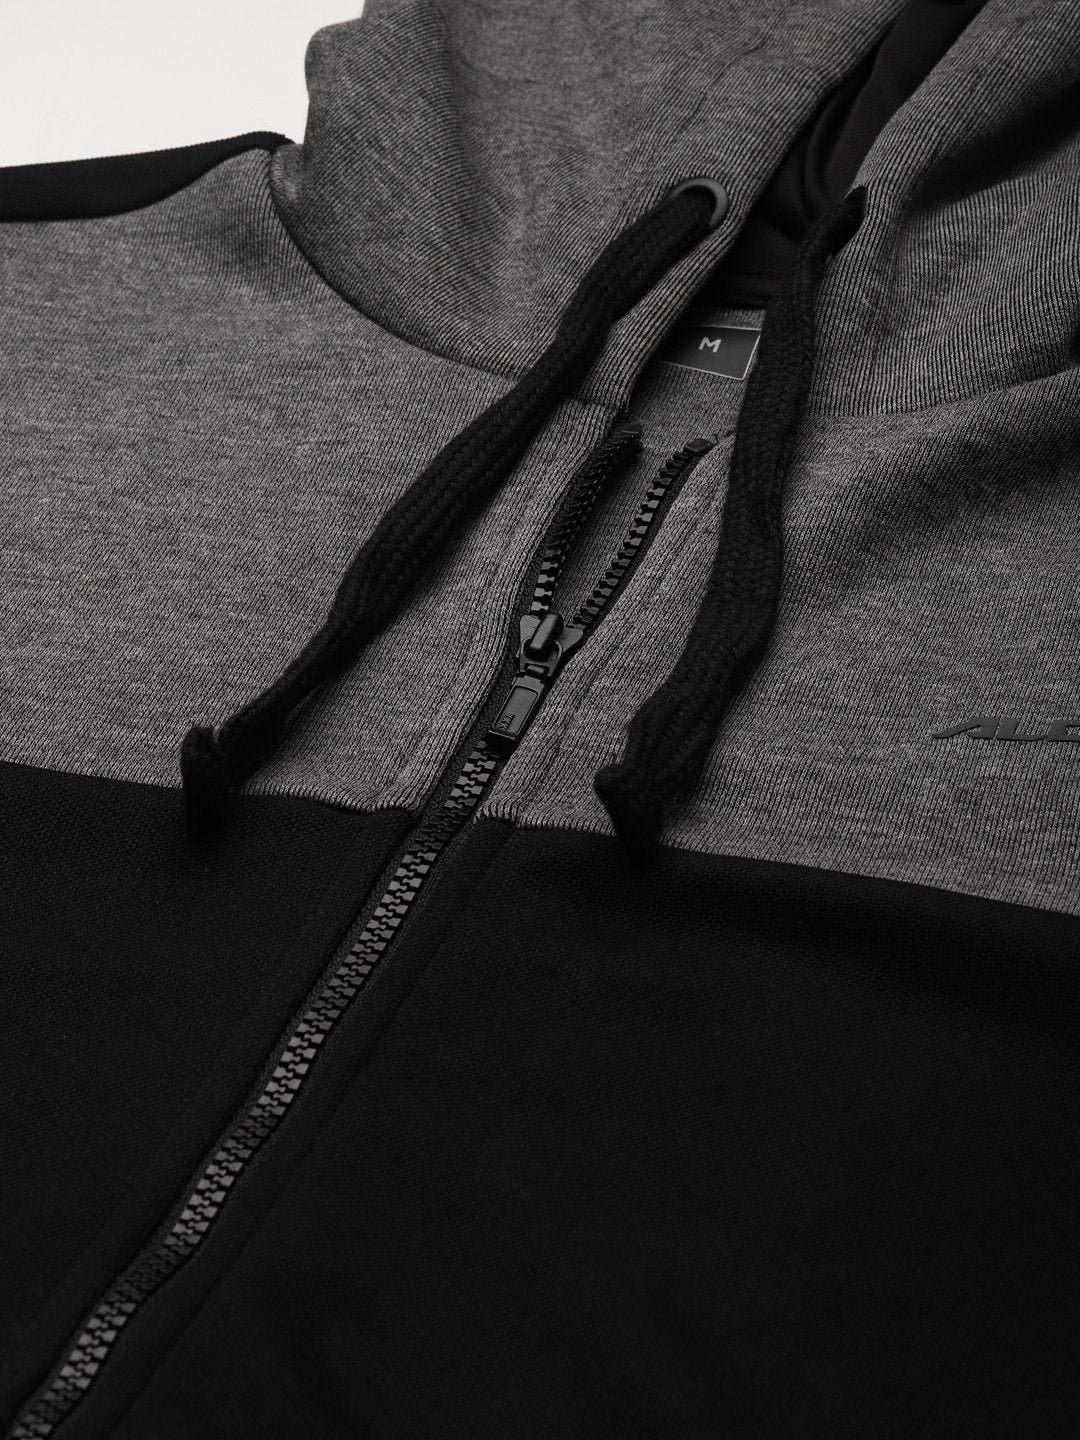 Alcis Men Black & Charcoal Grey Colourblocked Hooded Sweatshirt